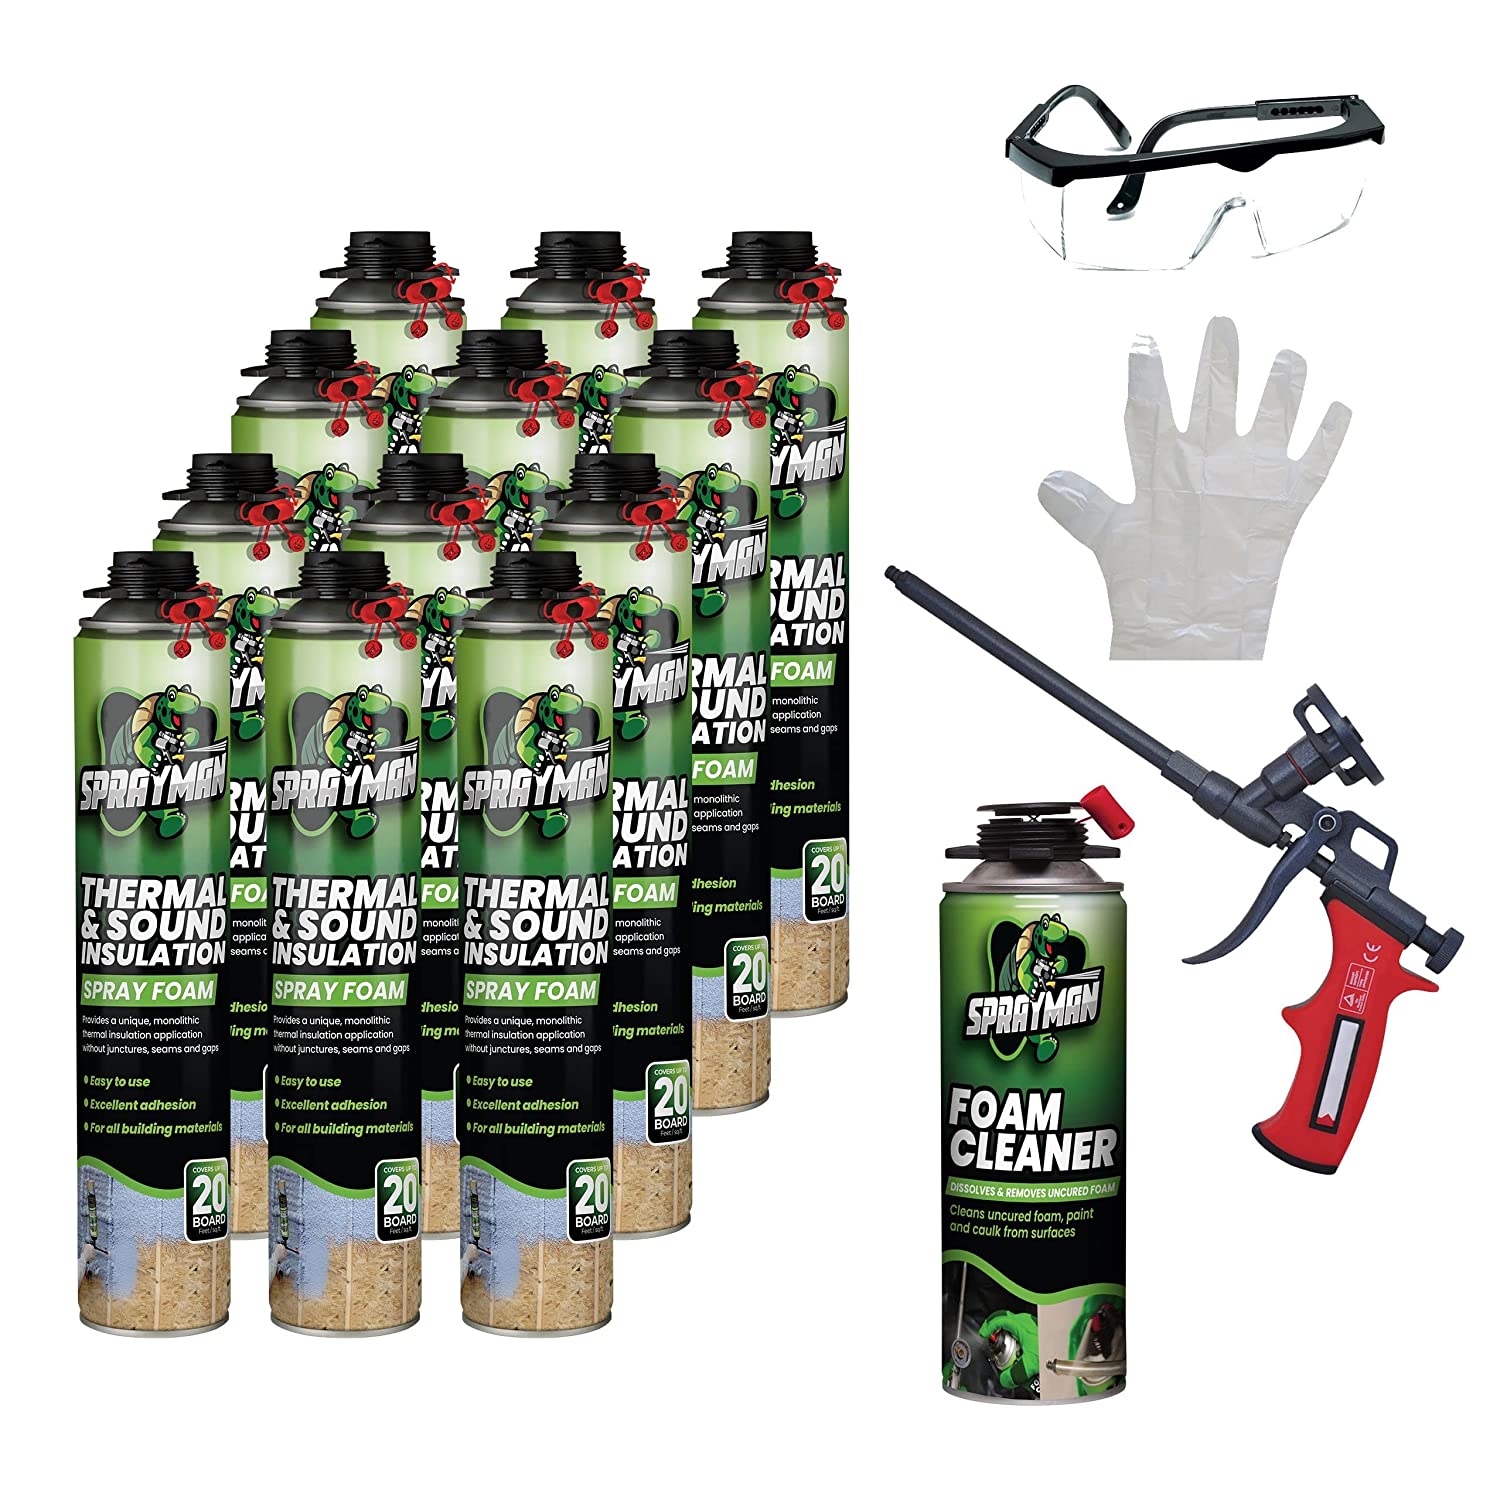 Sprayman Thermal & Sound Insulation Spray Foam 12 Can + Foam Cleaner + Foam Gun +Eye Protection + Glove